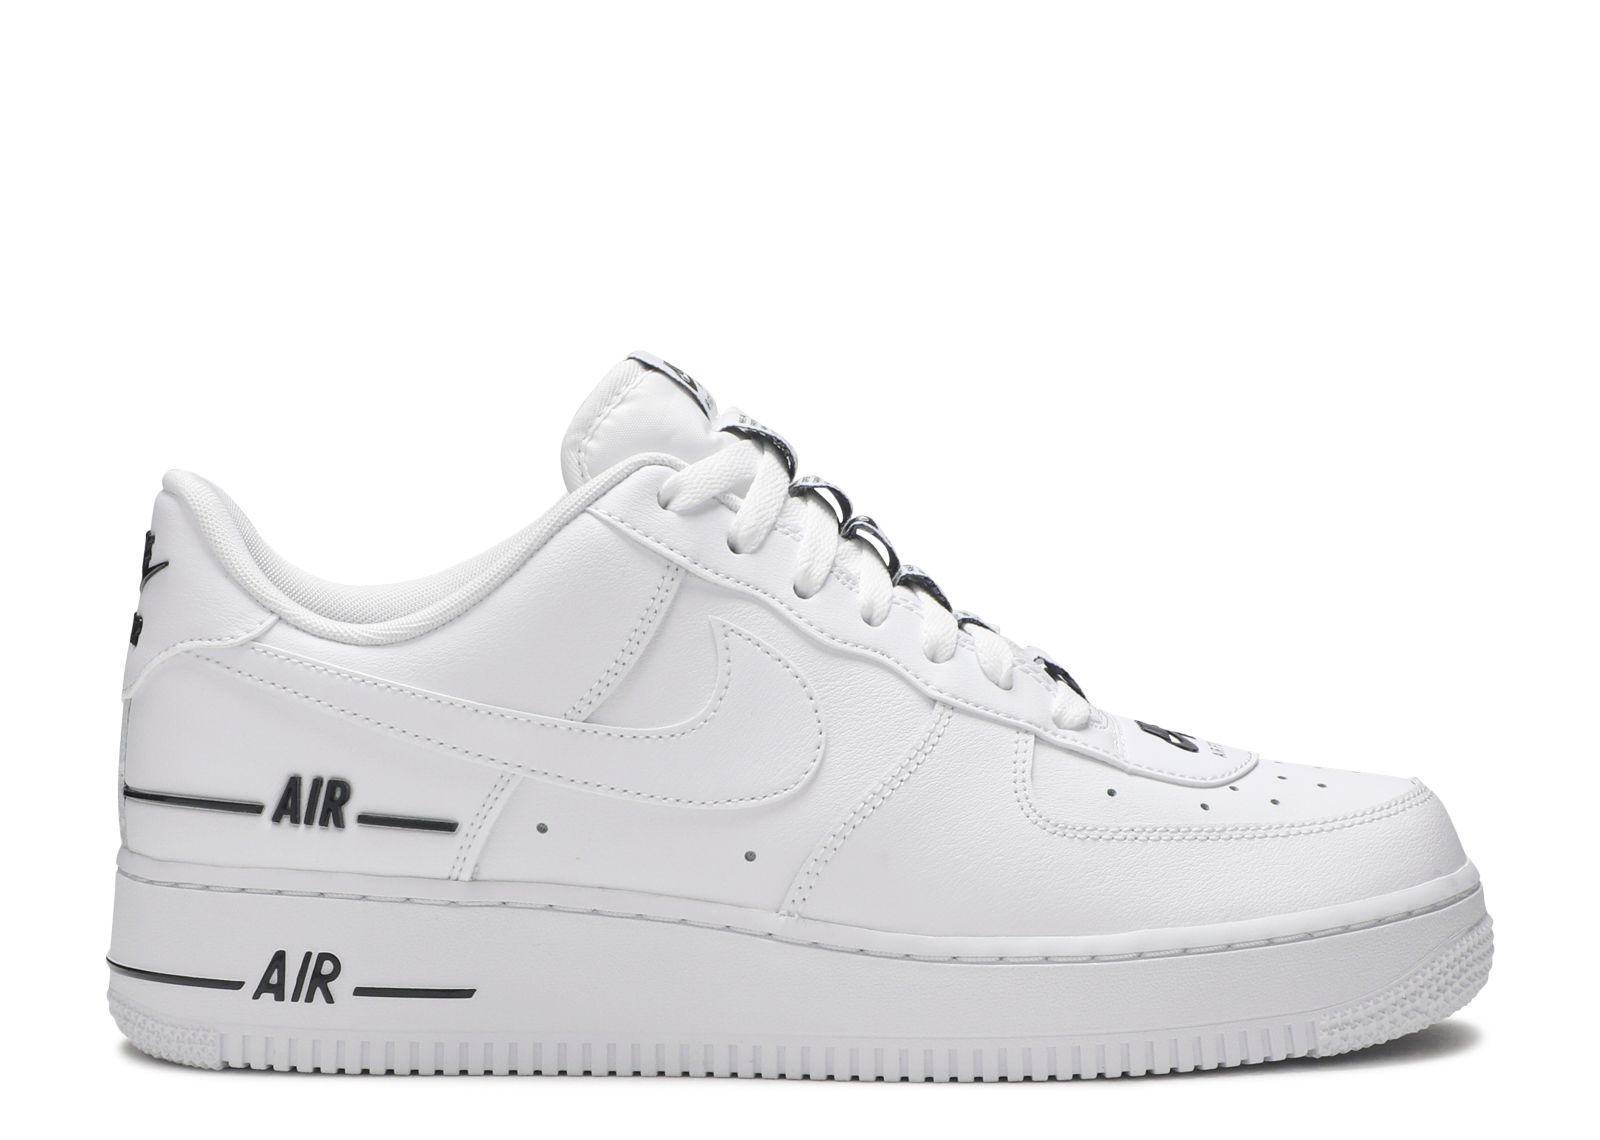 Nike Air Force 1 07 LV8 3 Double Air White Black Men Size 10 (CJ1379-100)